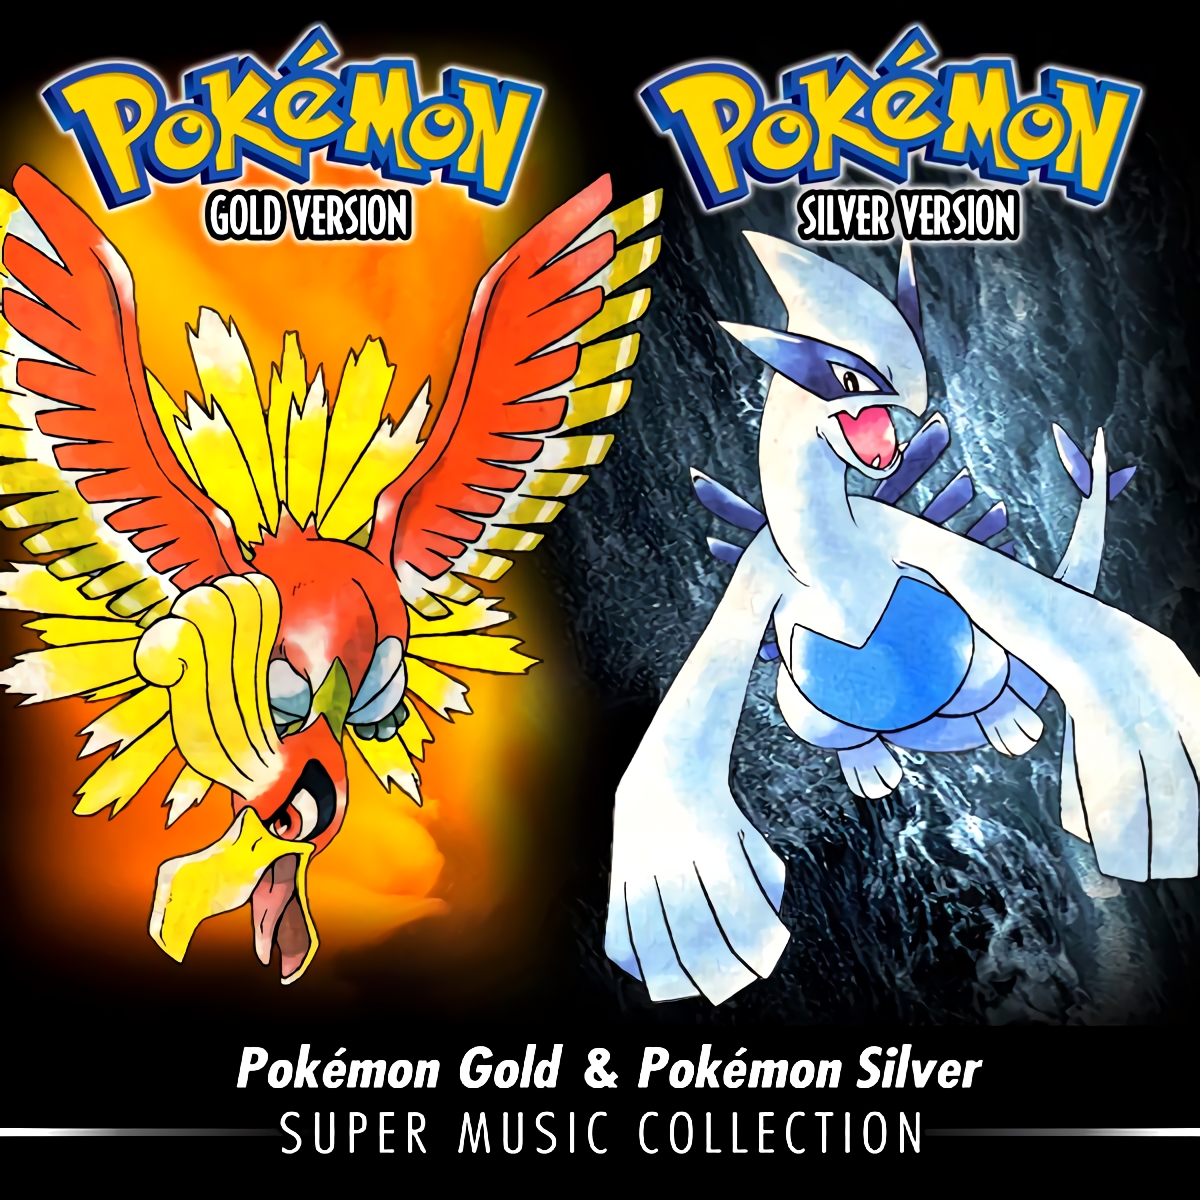 Pokémon HeartGold & Pokémon SoulSilver: Super Music Collection - Album by  GAME FREAK - Apple Music